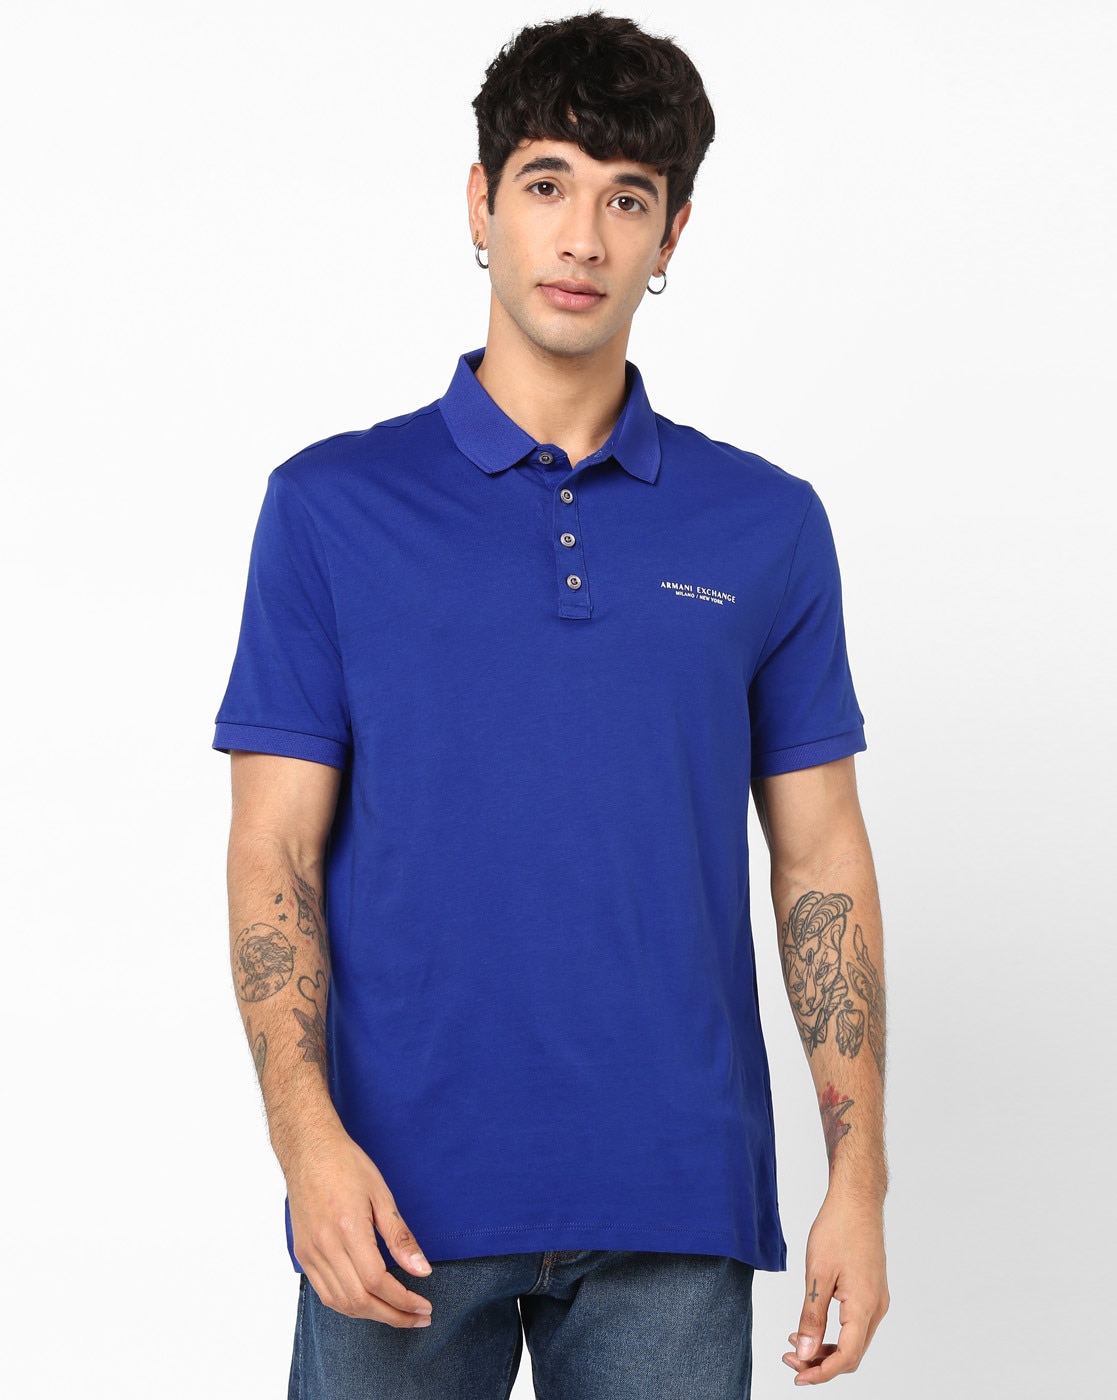 royal blue armani exchange shirt